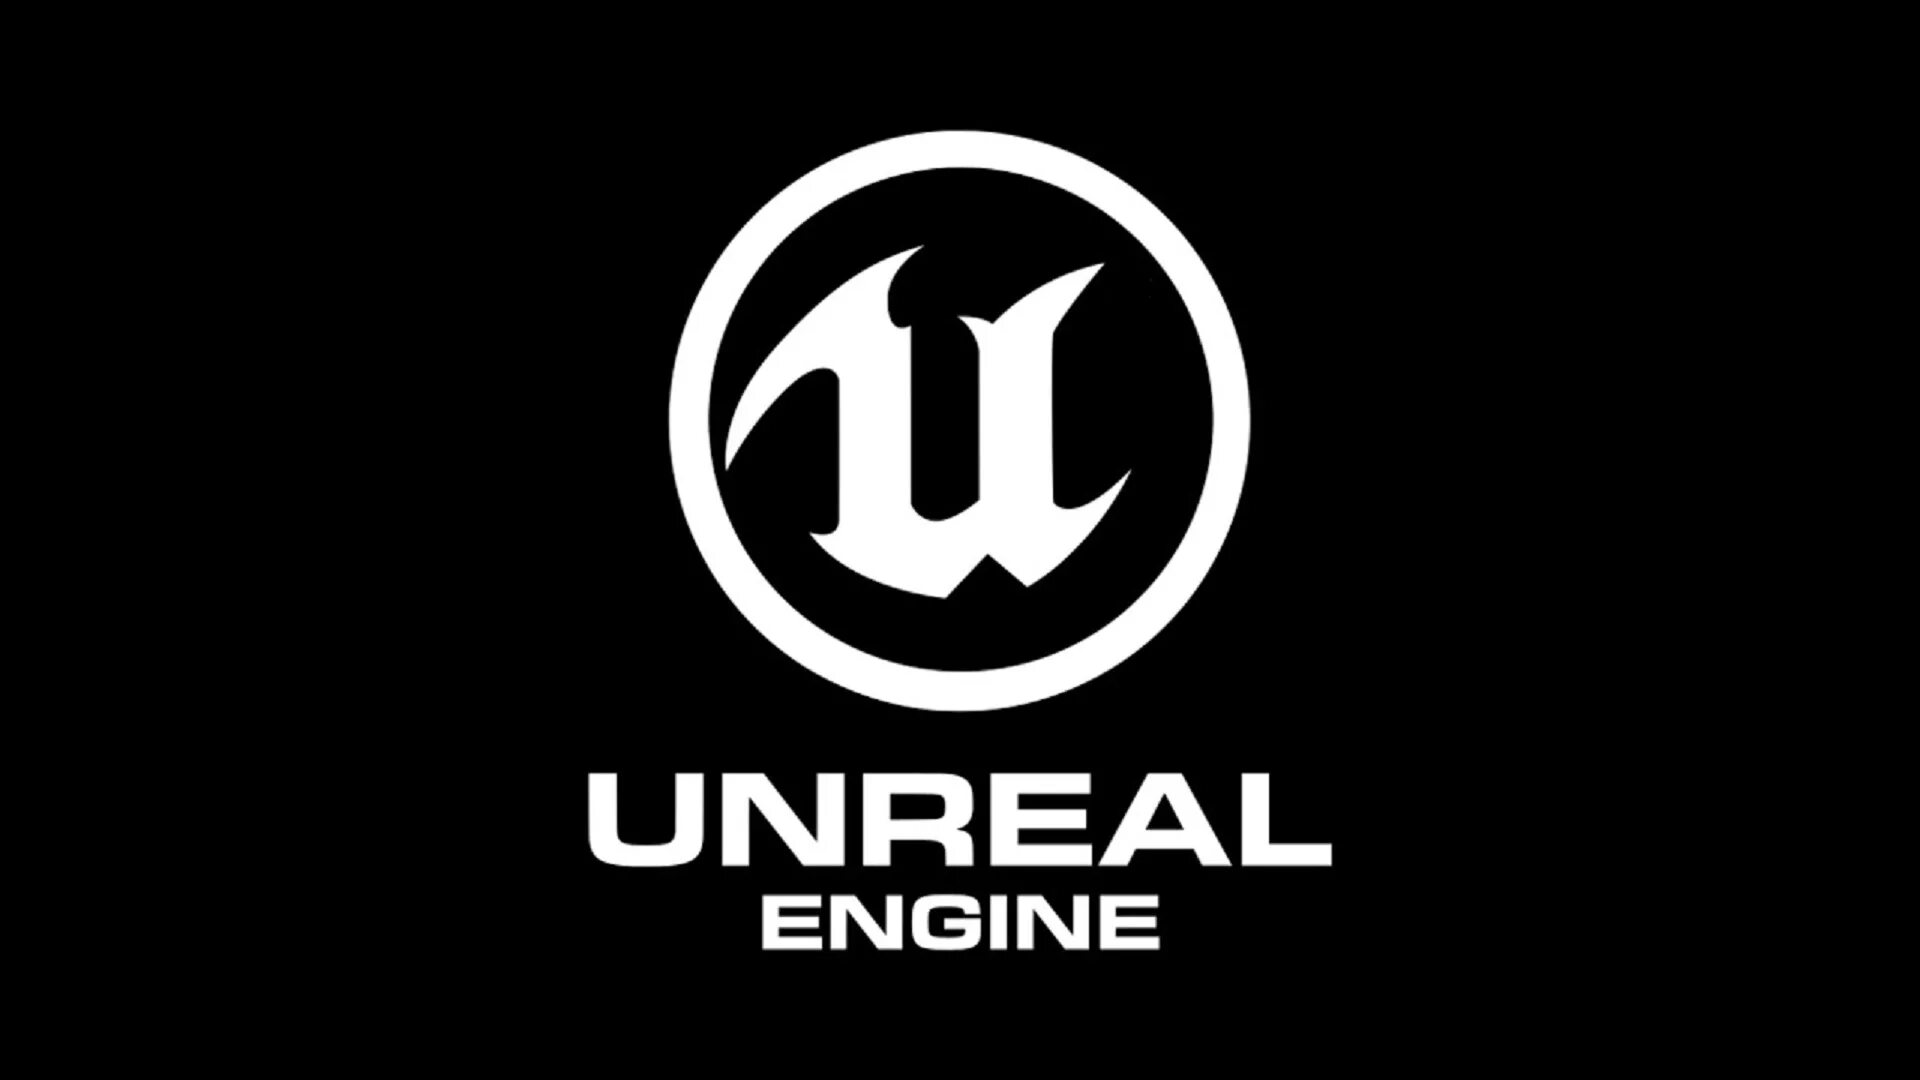 Unreal engine 5 logo. Unreal engine иконка. Unreal engine движок. Unreal engine 4 лого. Epic games ue